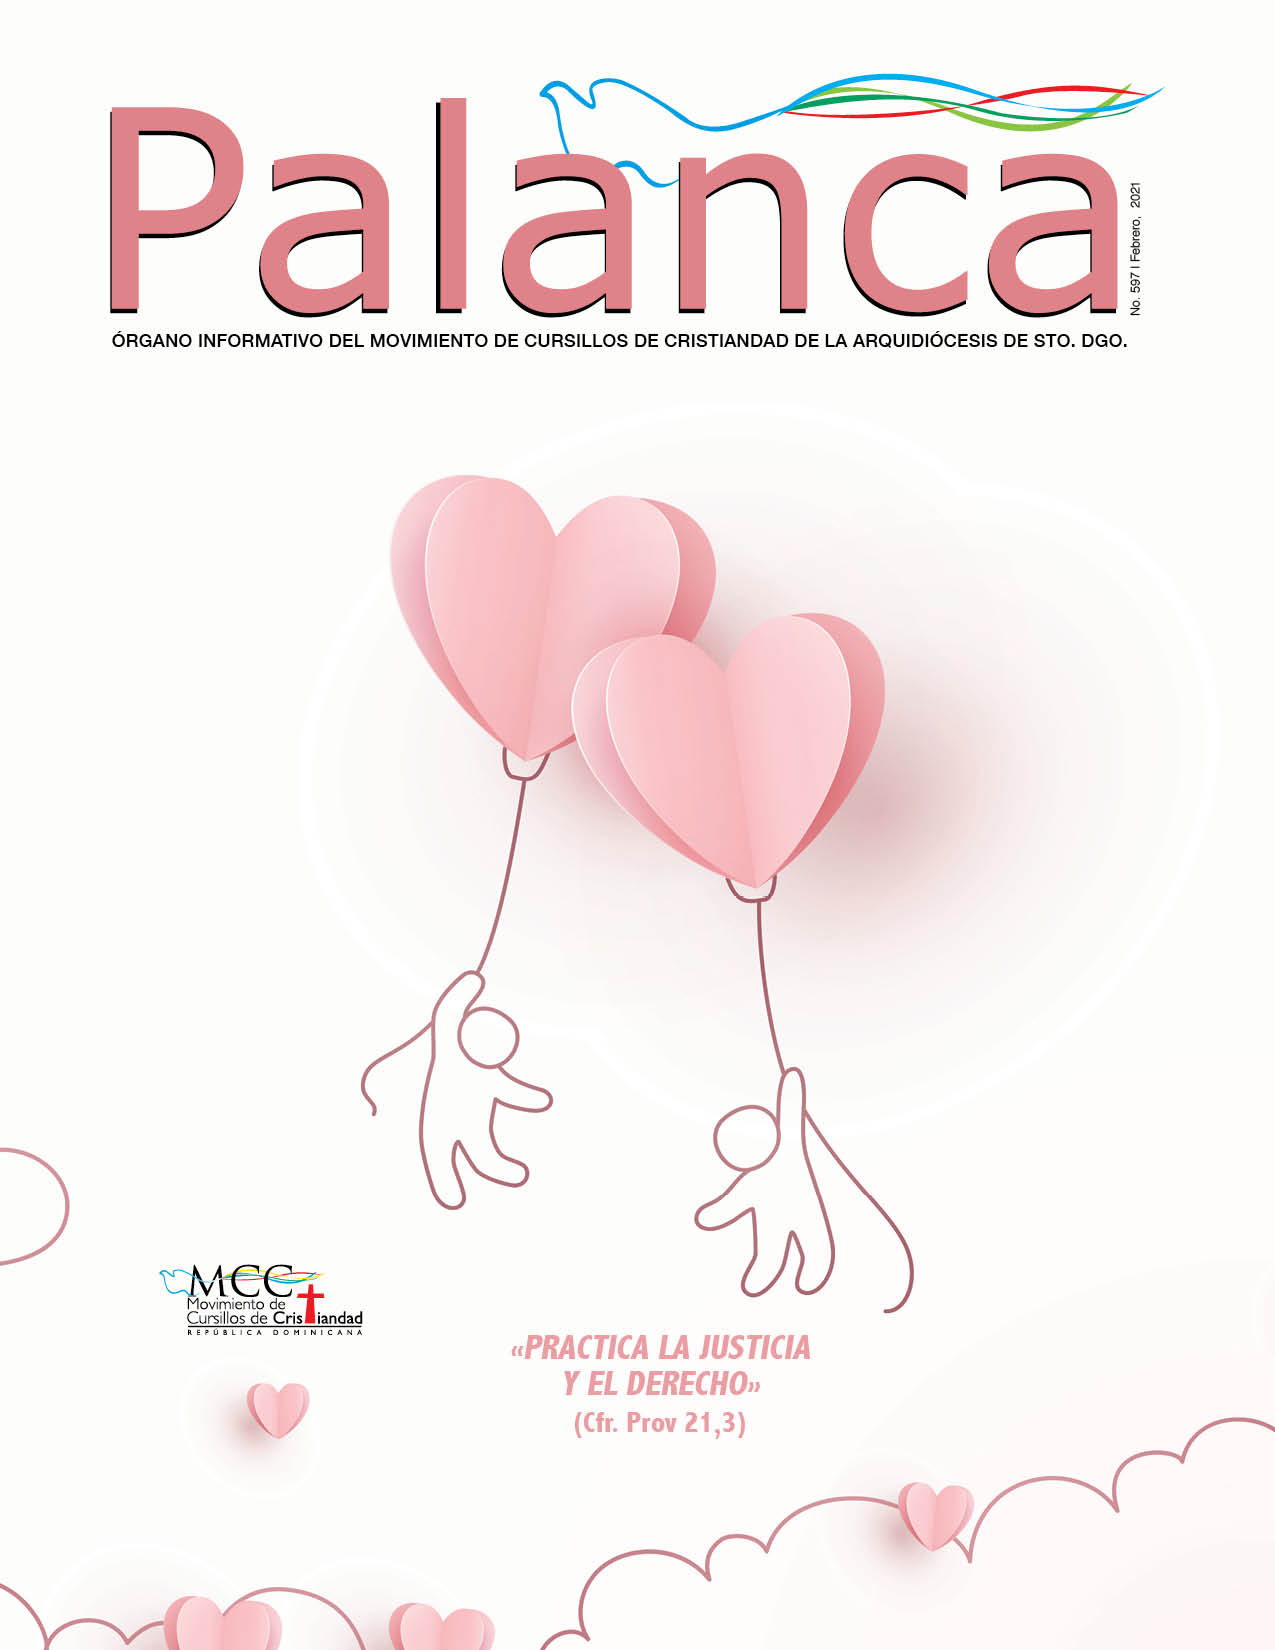 Portada-Revista-Palanca_FEBRERO-2021.jpg